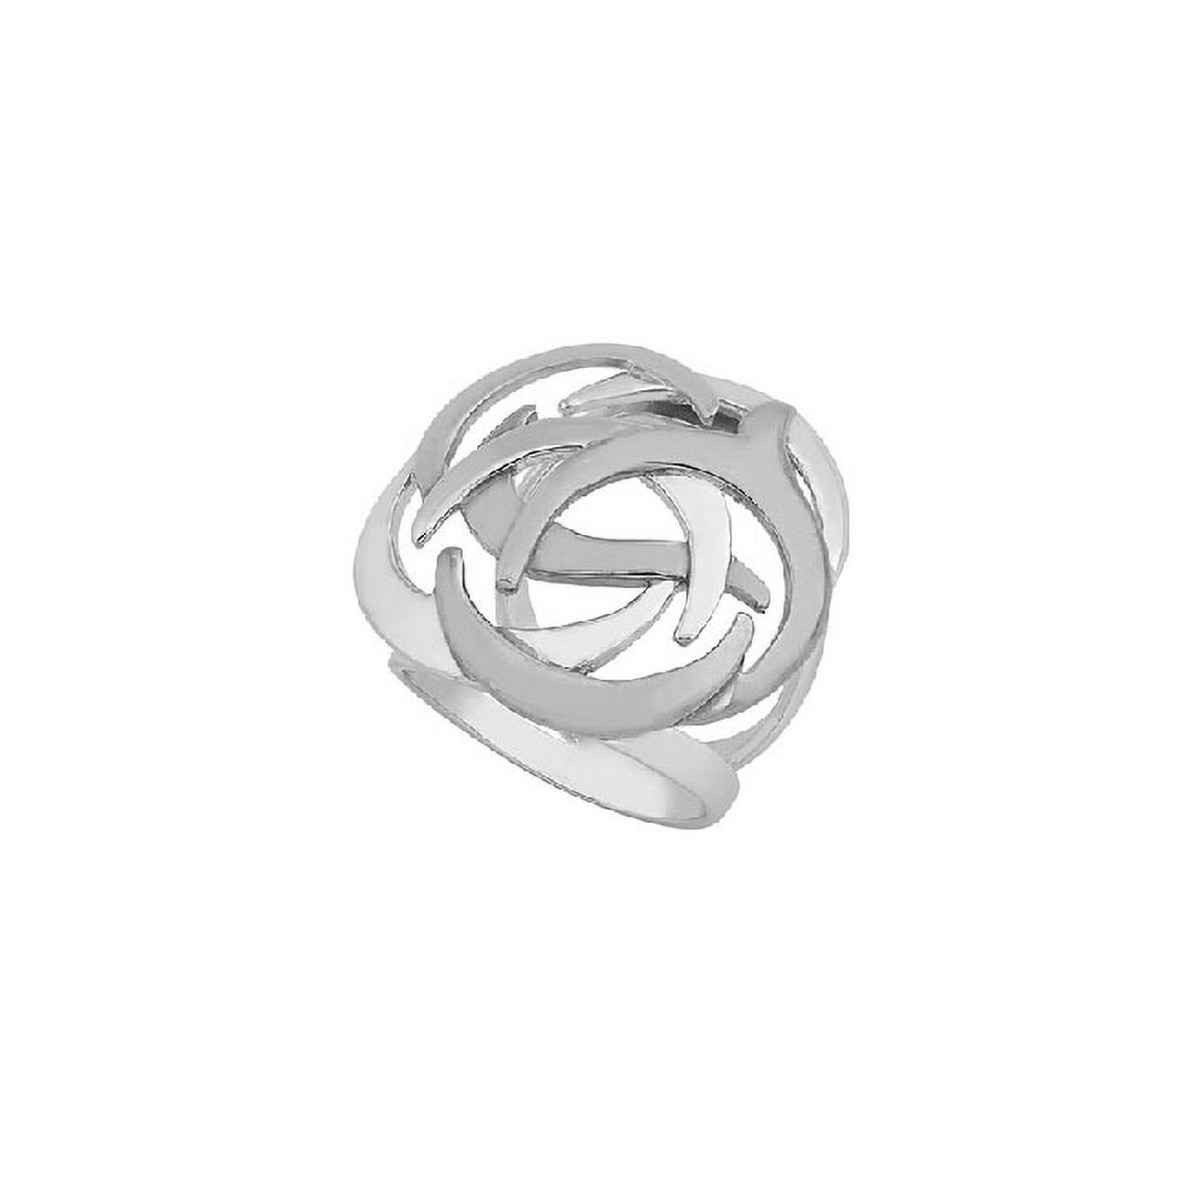 SHIELD Ring in Silver.